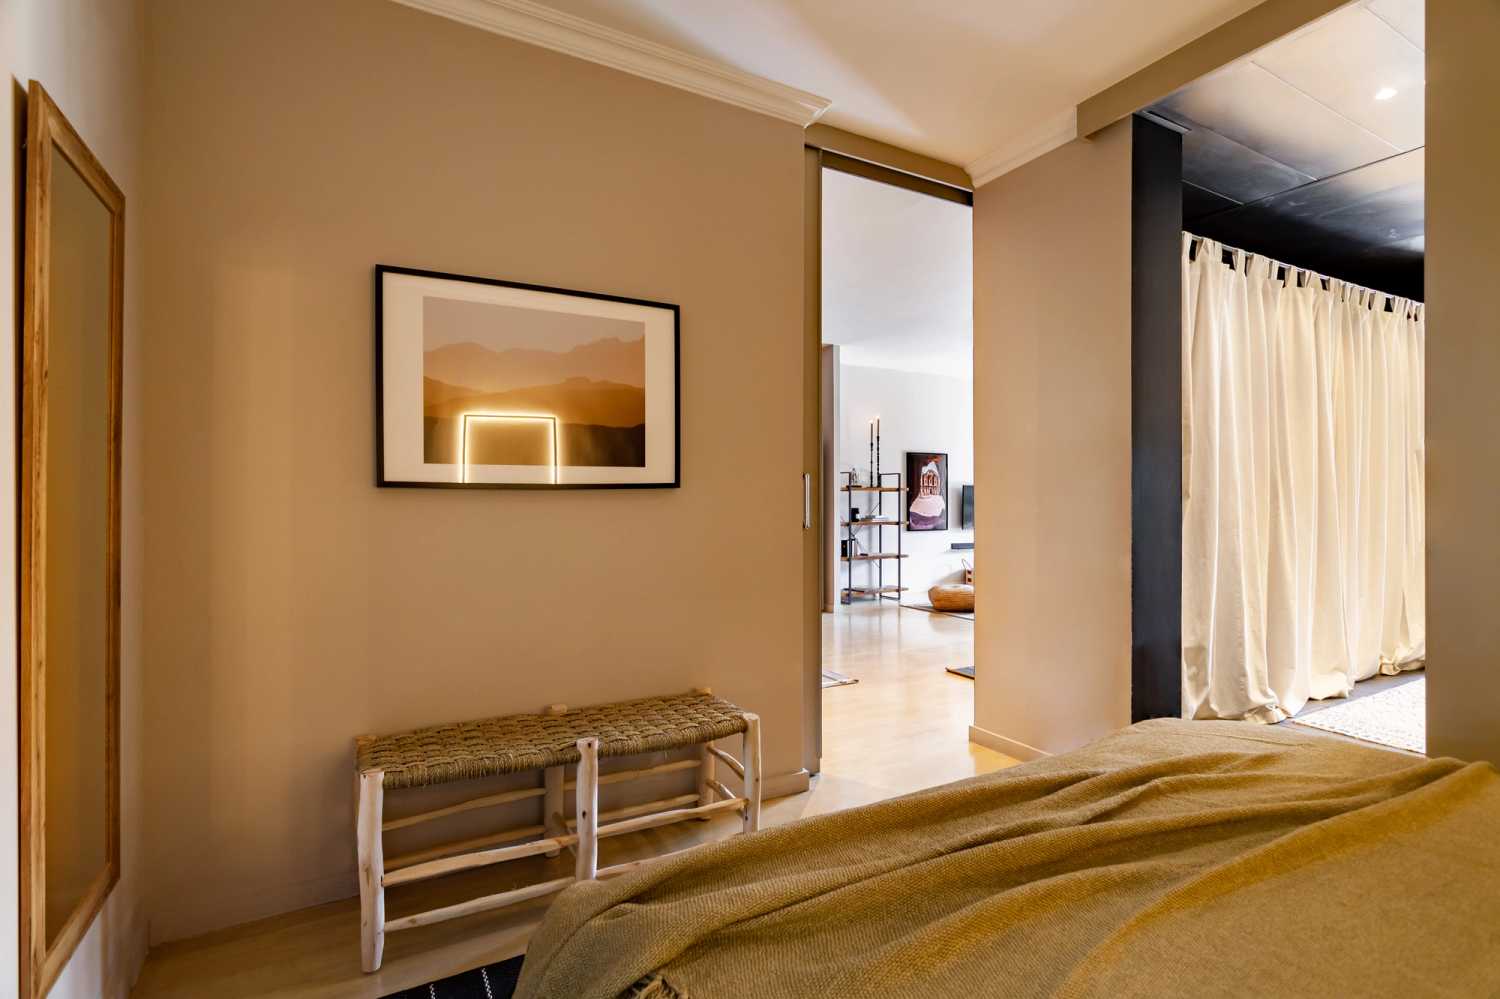 1654088103-bedroom-ensuited-dressing-barcelona-passeig-de-gracia-79-l-04.jpg